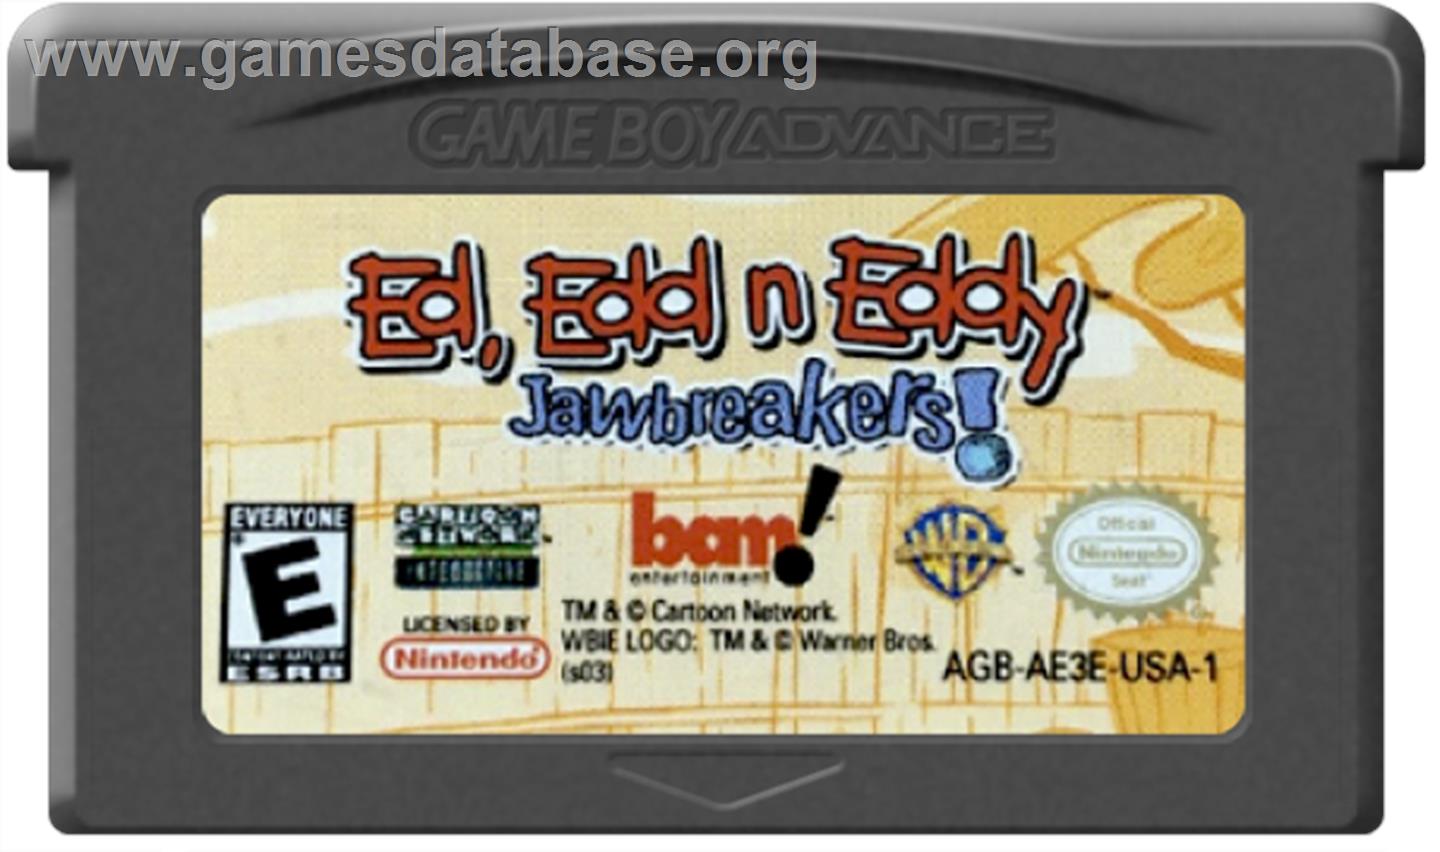 Ed, Edd n Eddy: Jawbreakers - Nintendo Game Boy Advance - Artwork - Cartridge